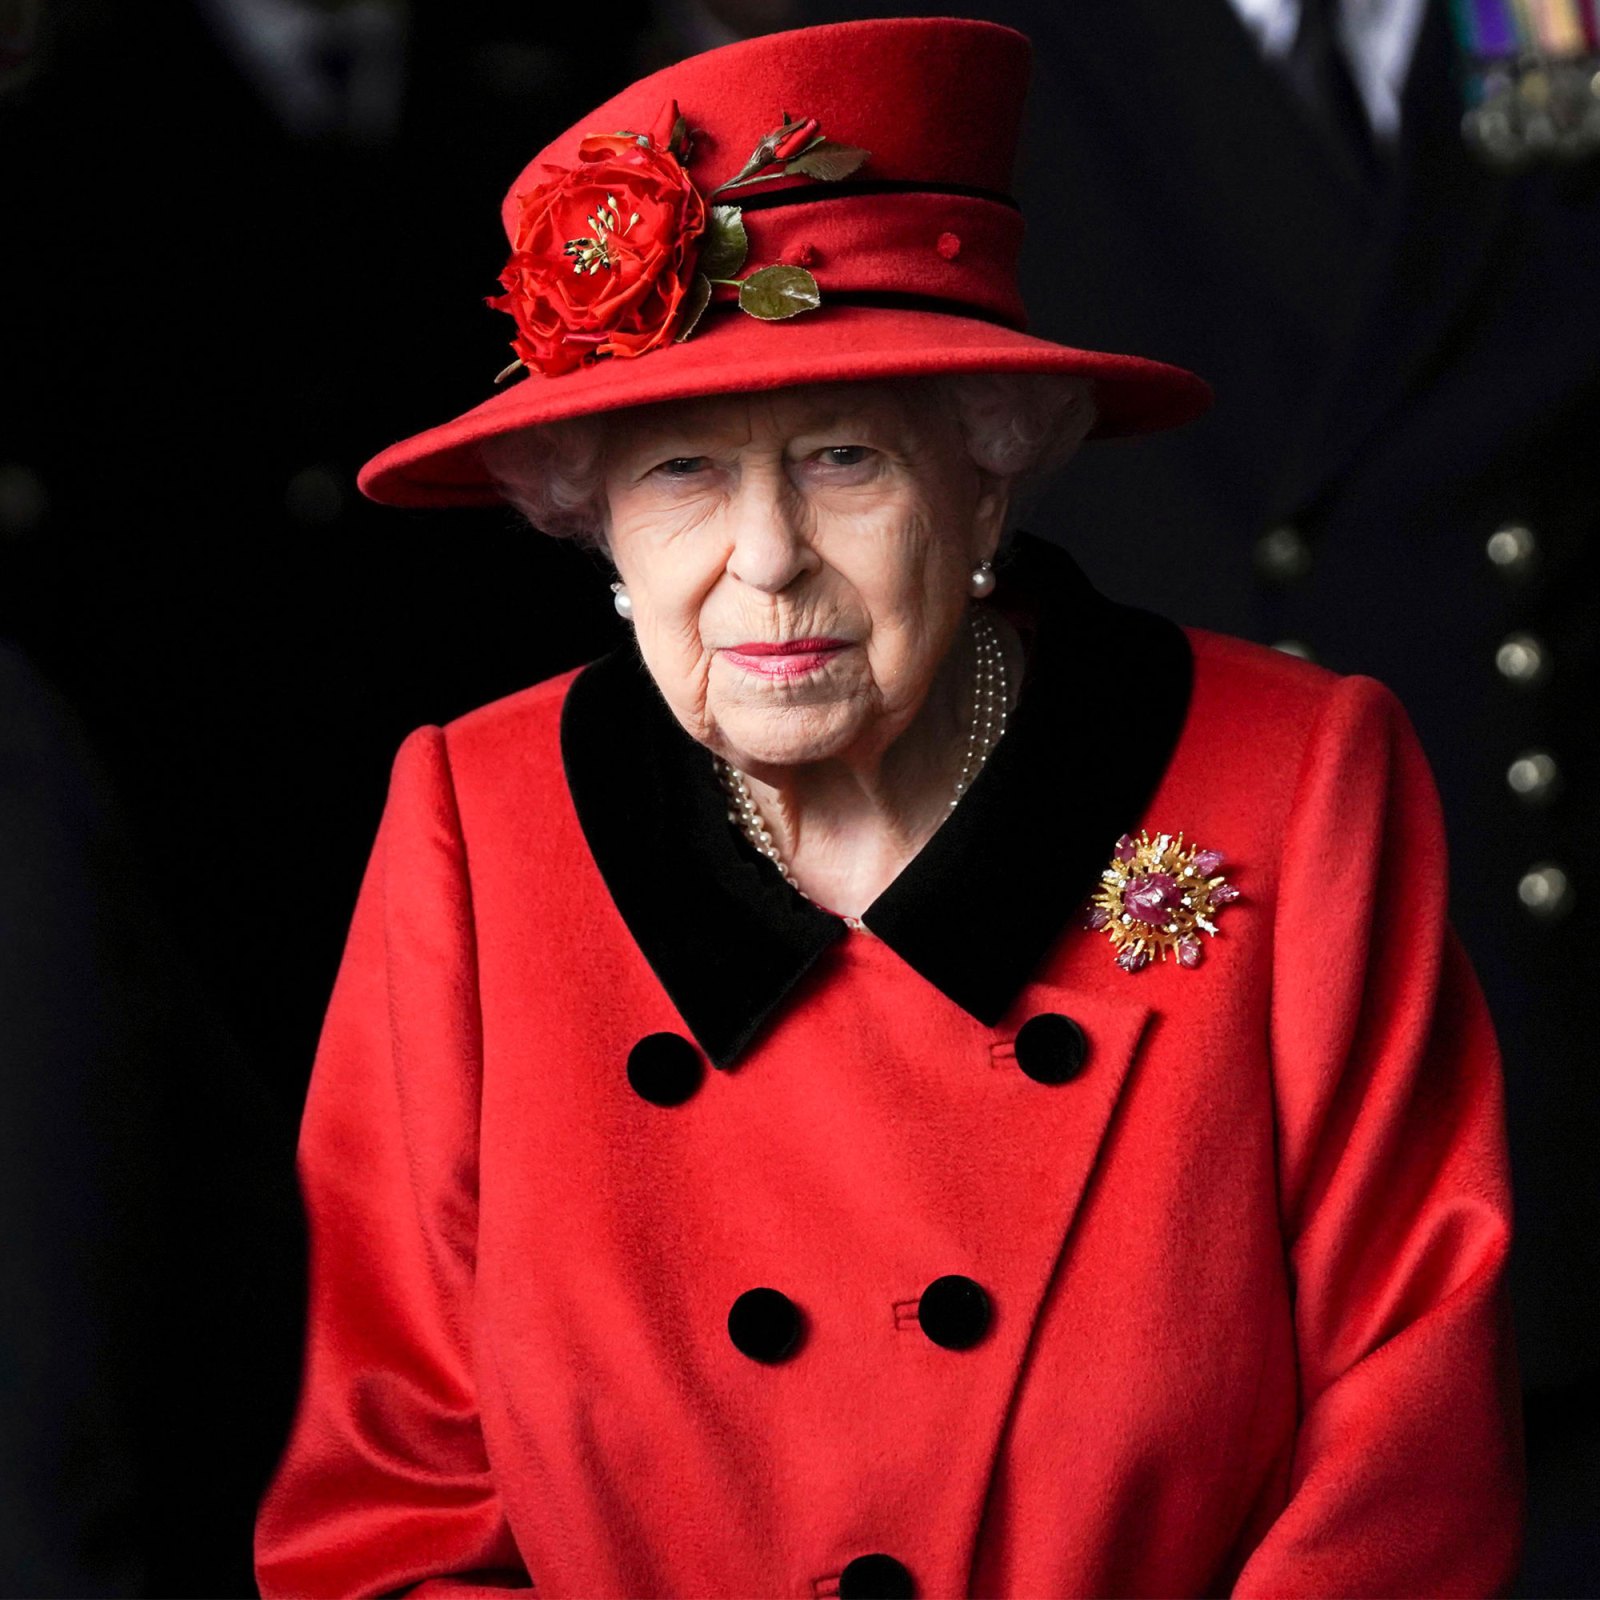 Dignitaries Around the World React to Queen Elizabeth II’s Health Concerns